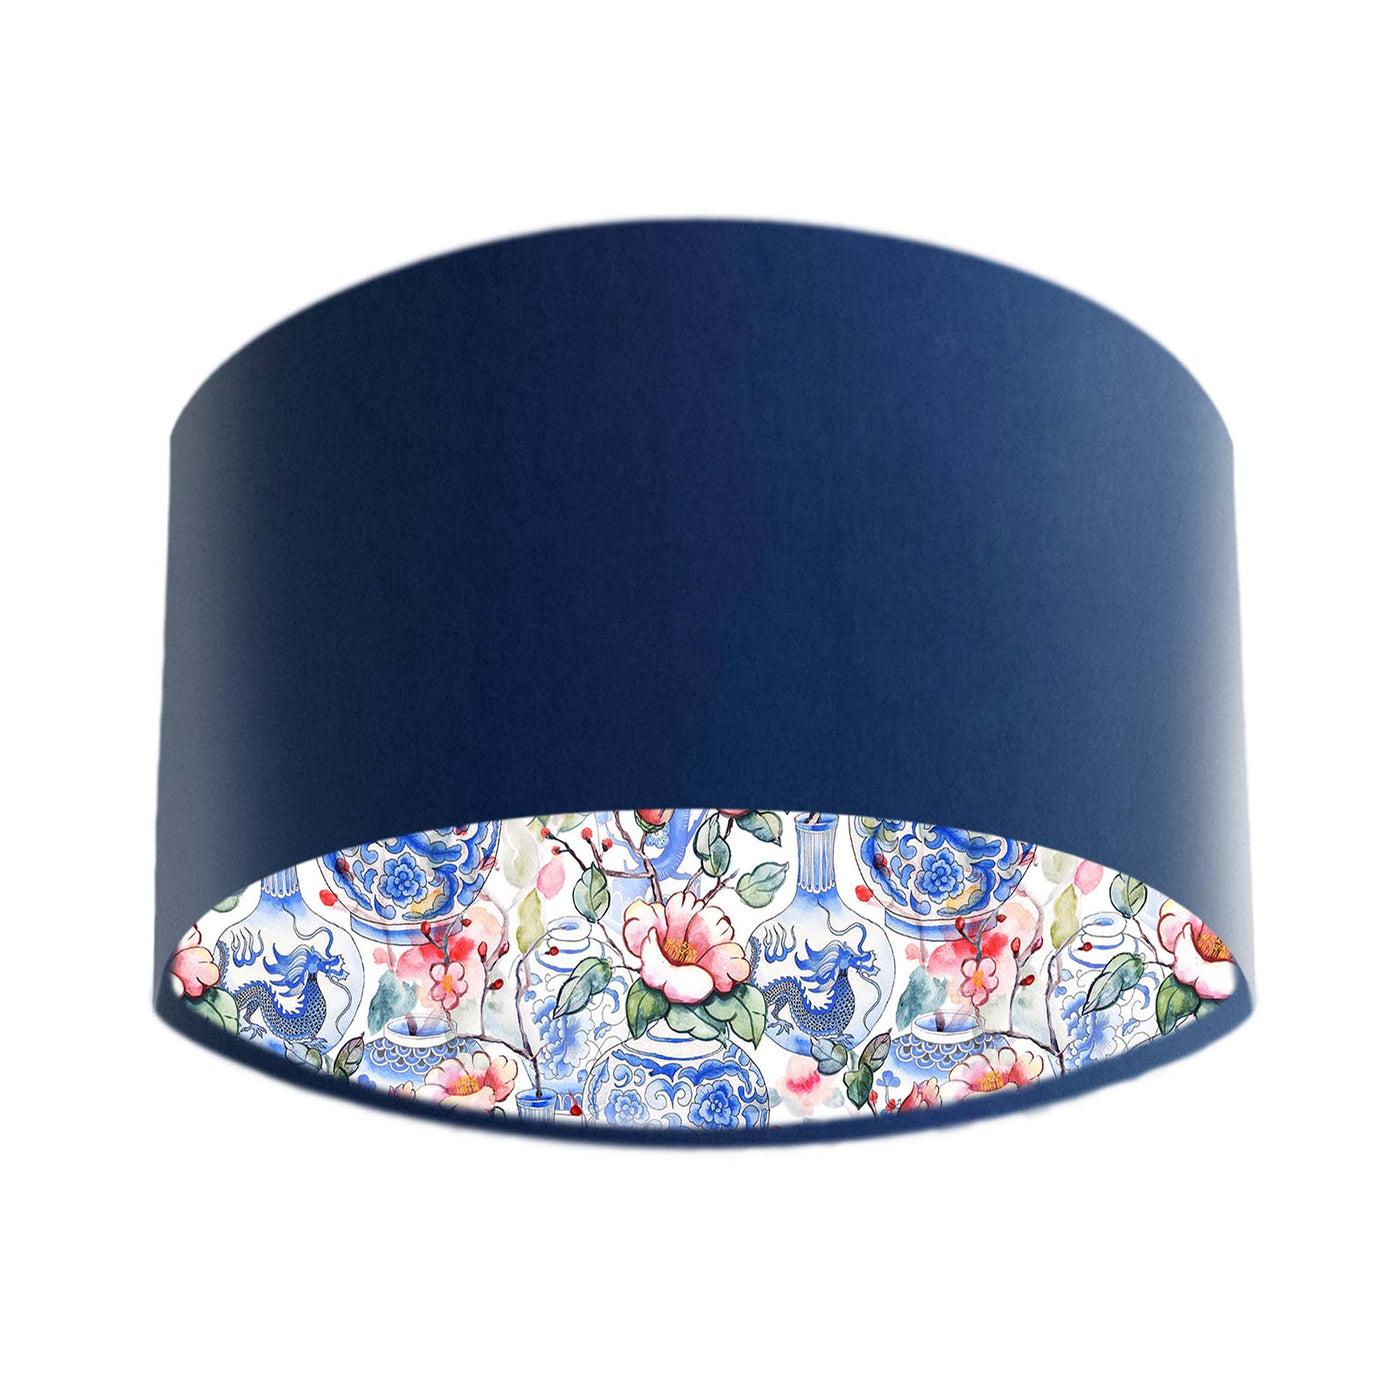 Navy Blue Velvet Lamp Shade with Oriental Vases Lining